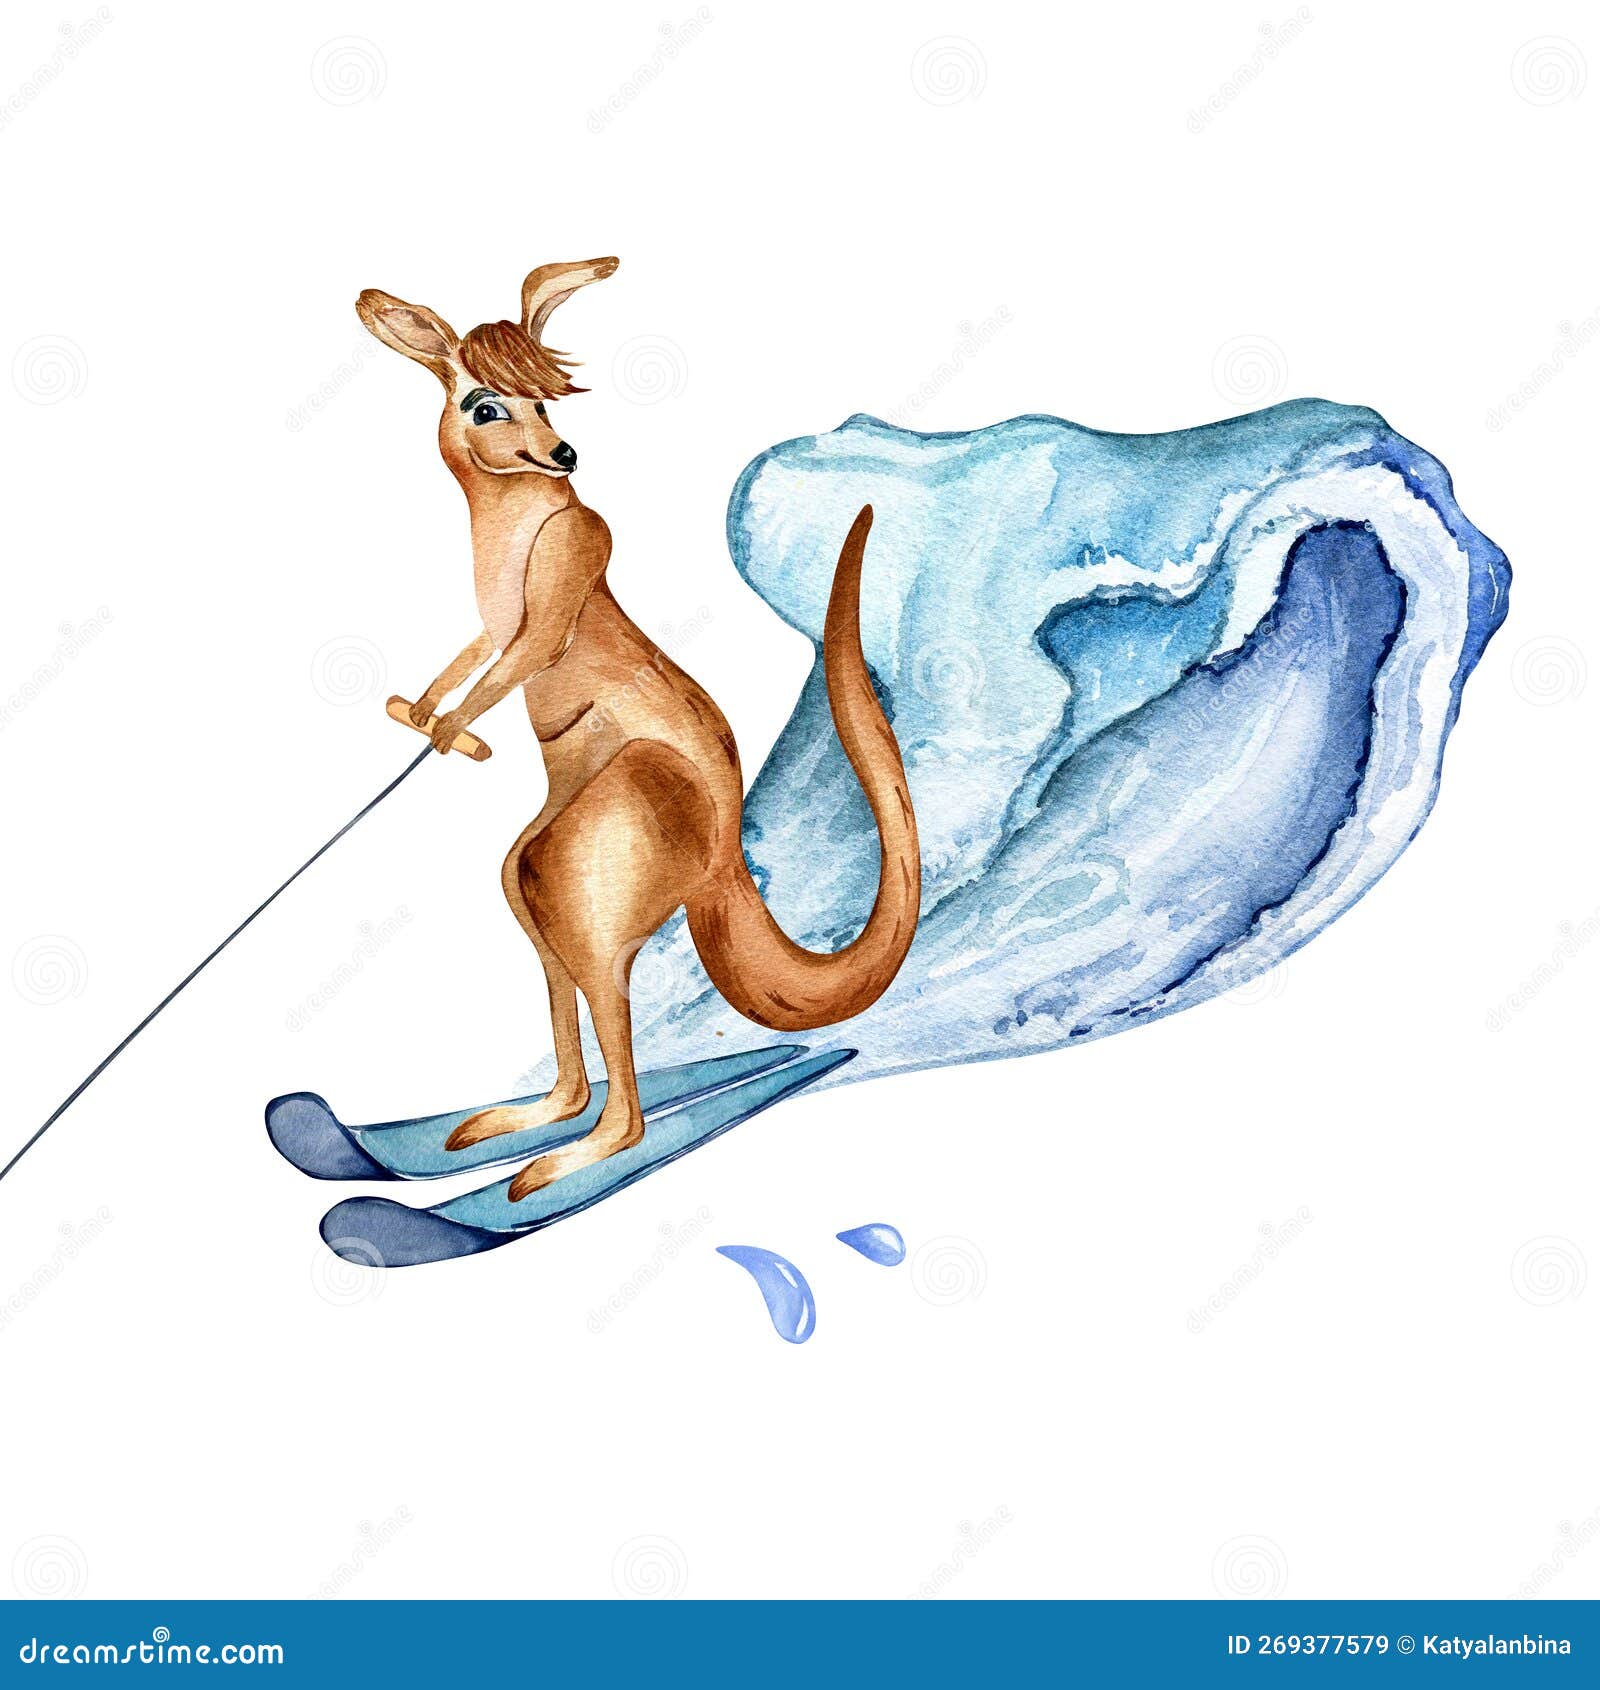 Water skiing cartoon animal stock illustrations â water skiing cartoon animal stock illustrations vectors clipart